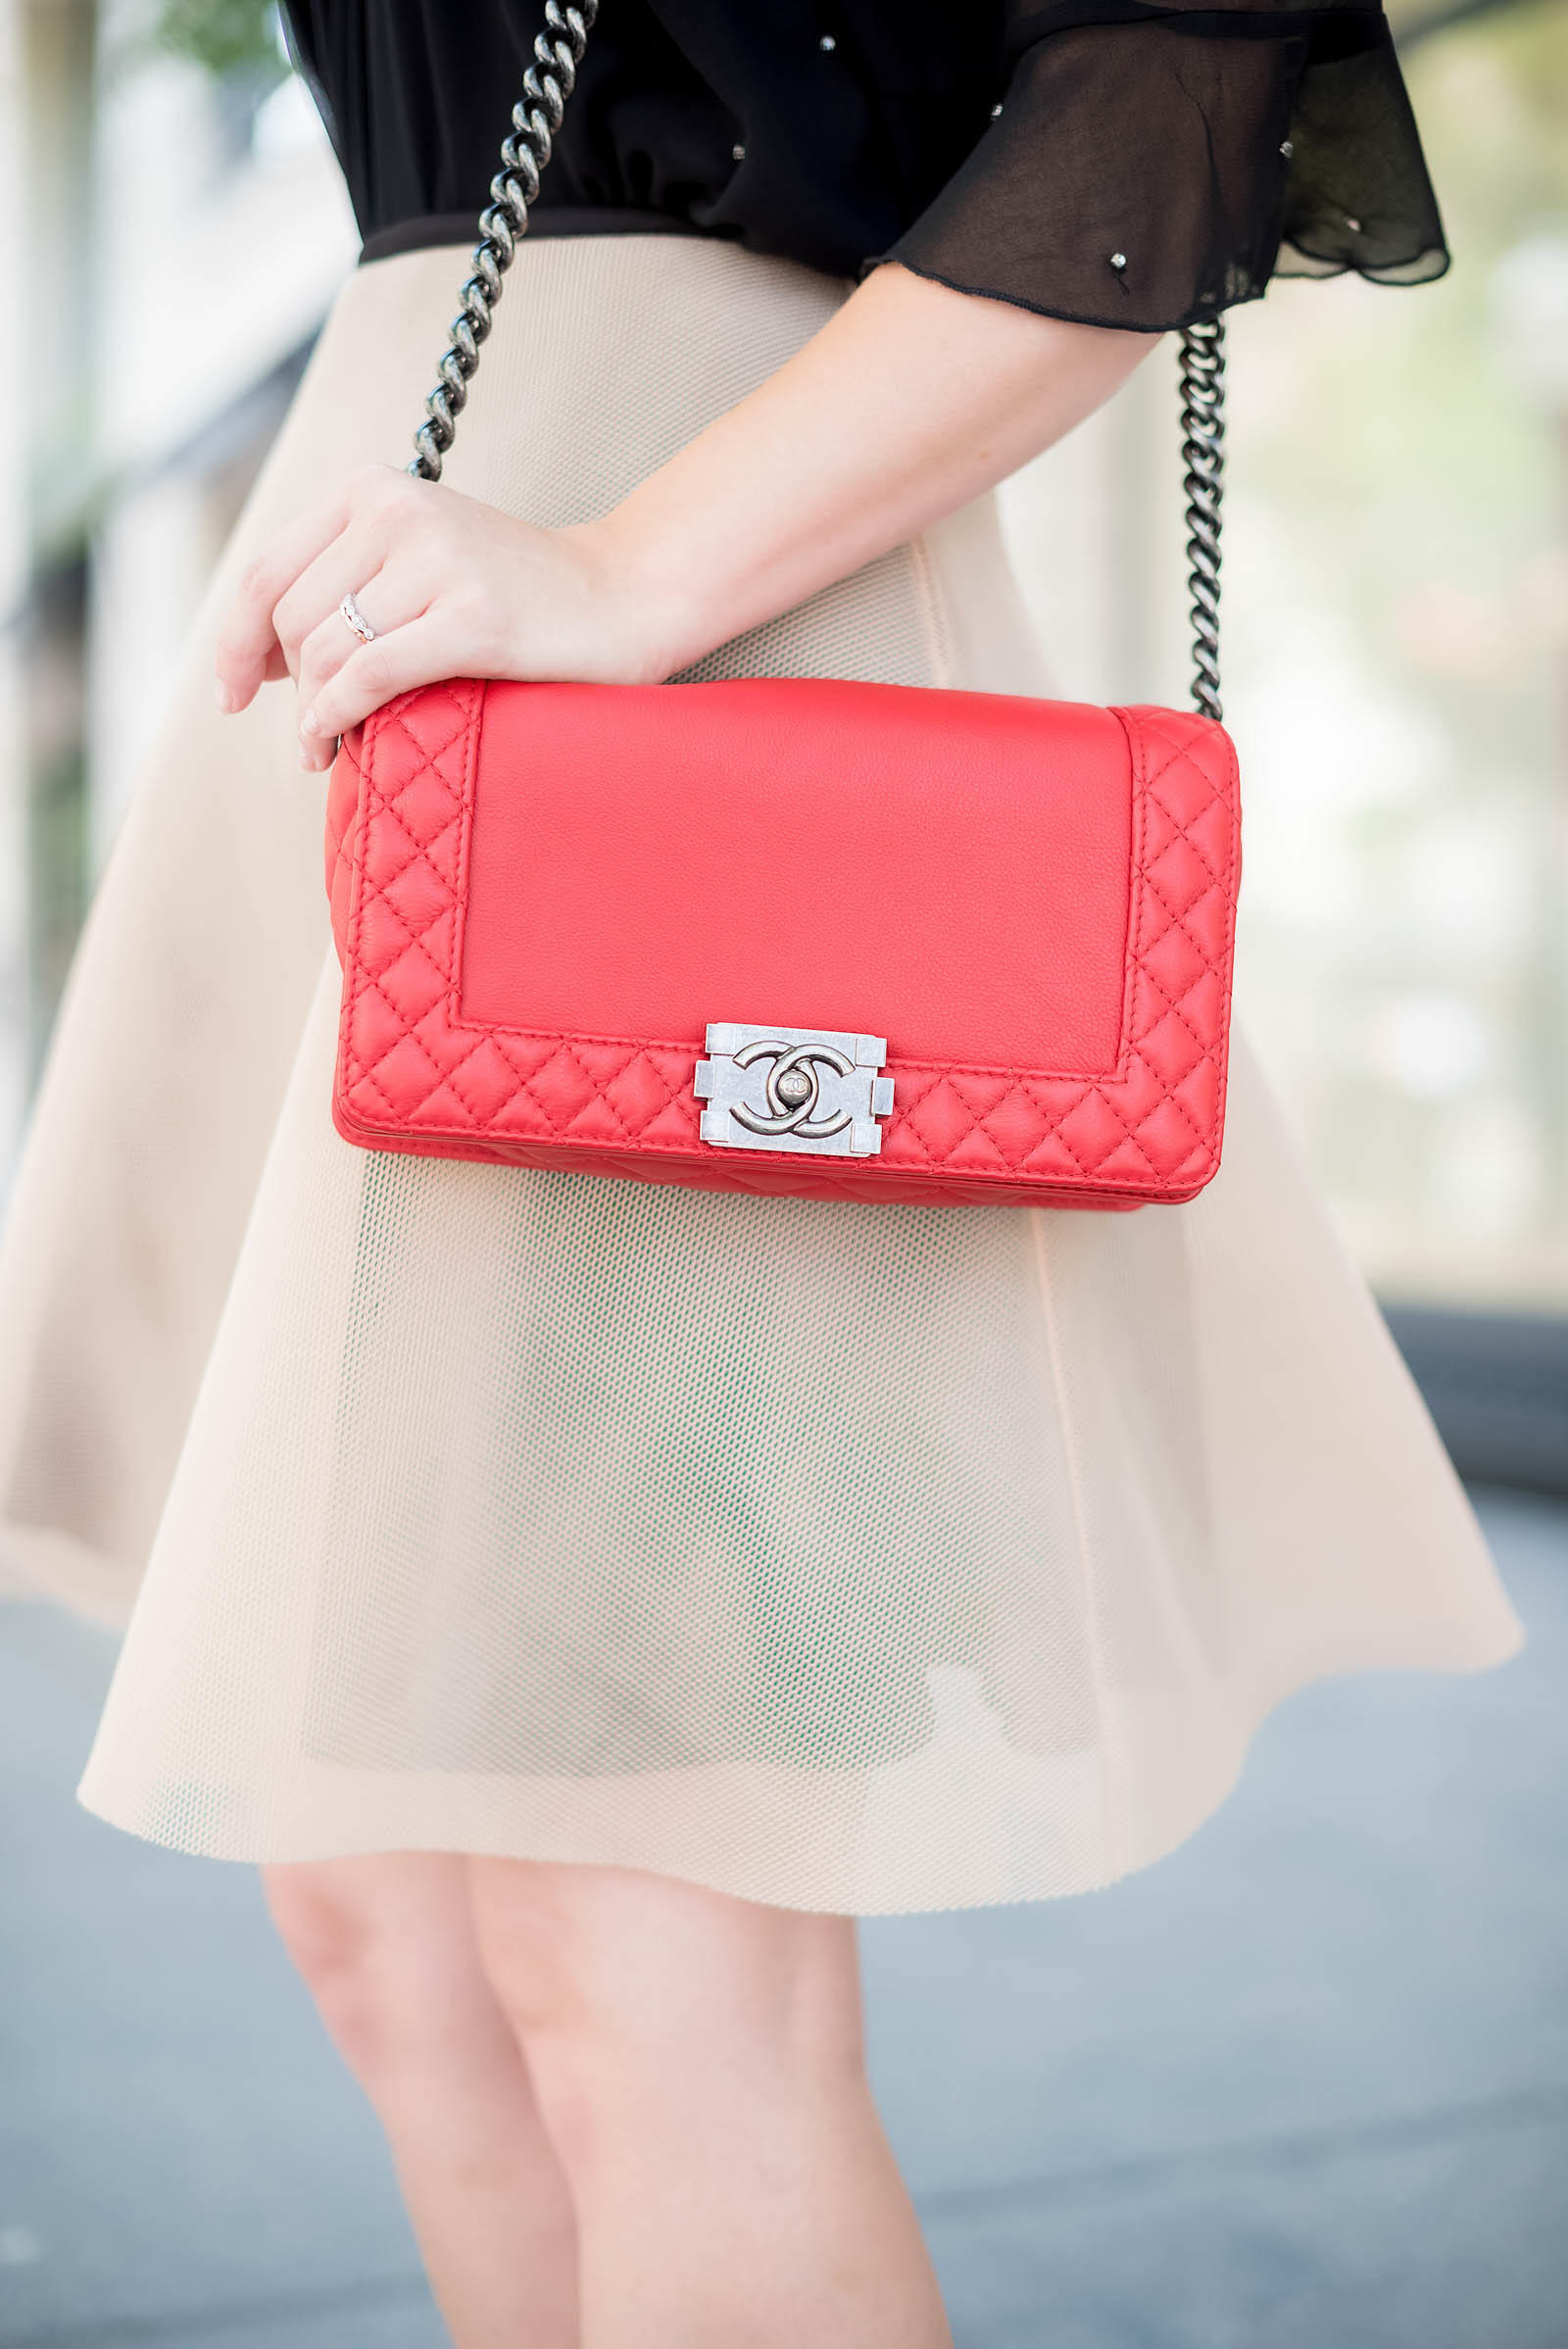 Chanel Red Boy Bag Topshop Zara Red Lips